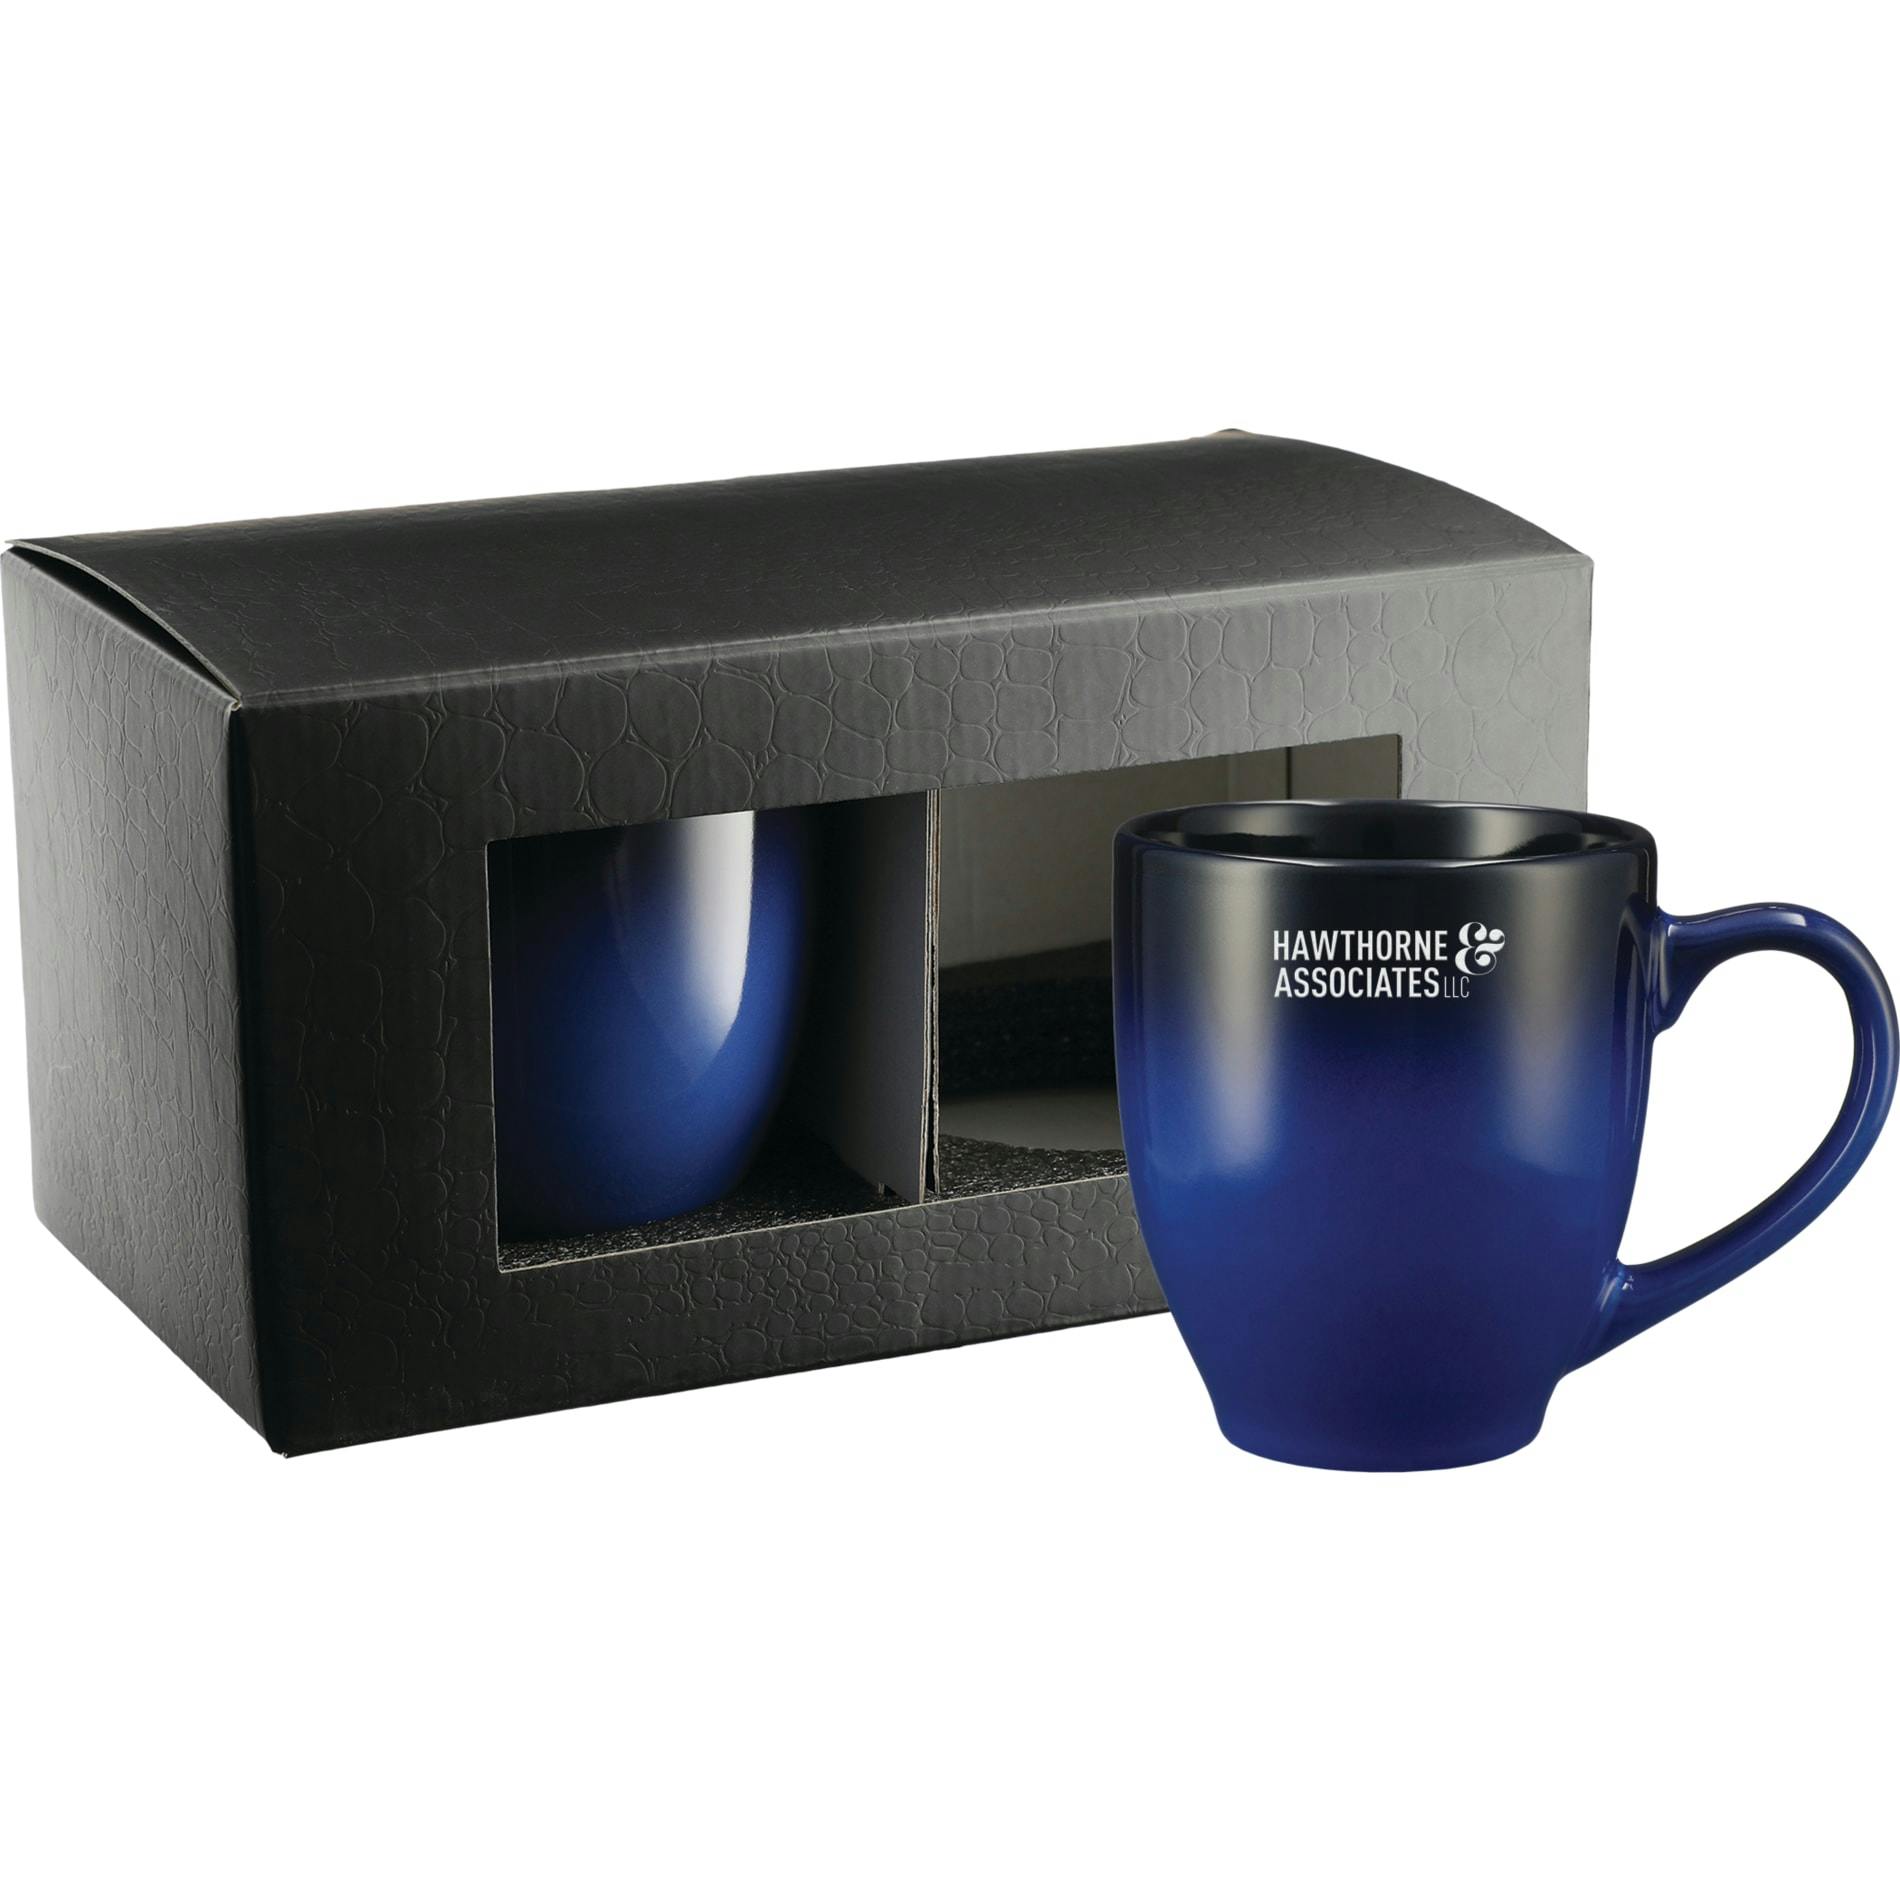 Bistro Ceramic Mug 2 in 1 Gift Set - additional Image 2